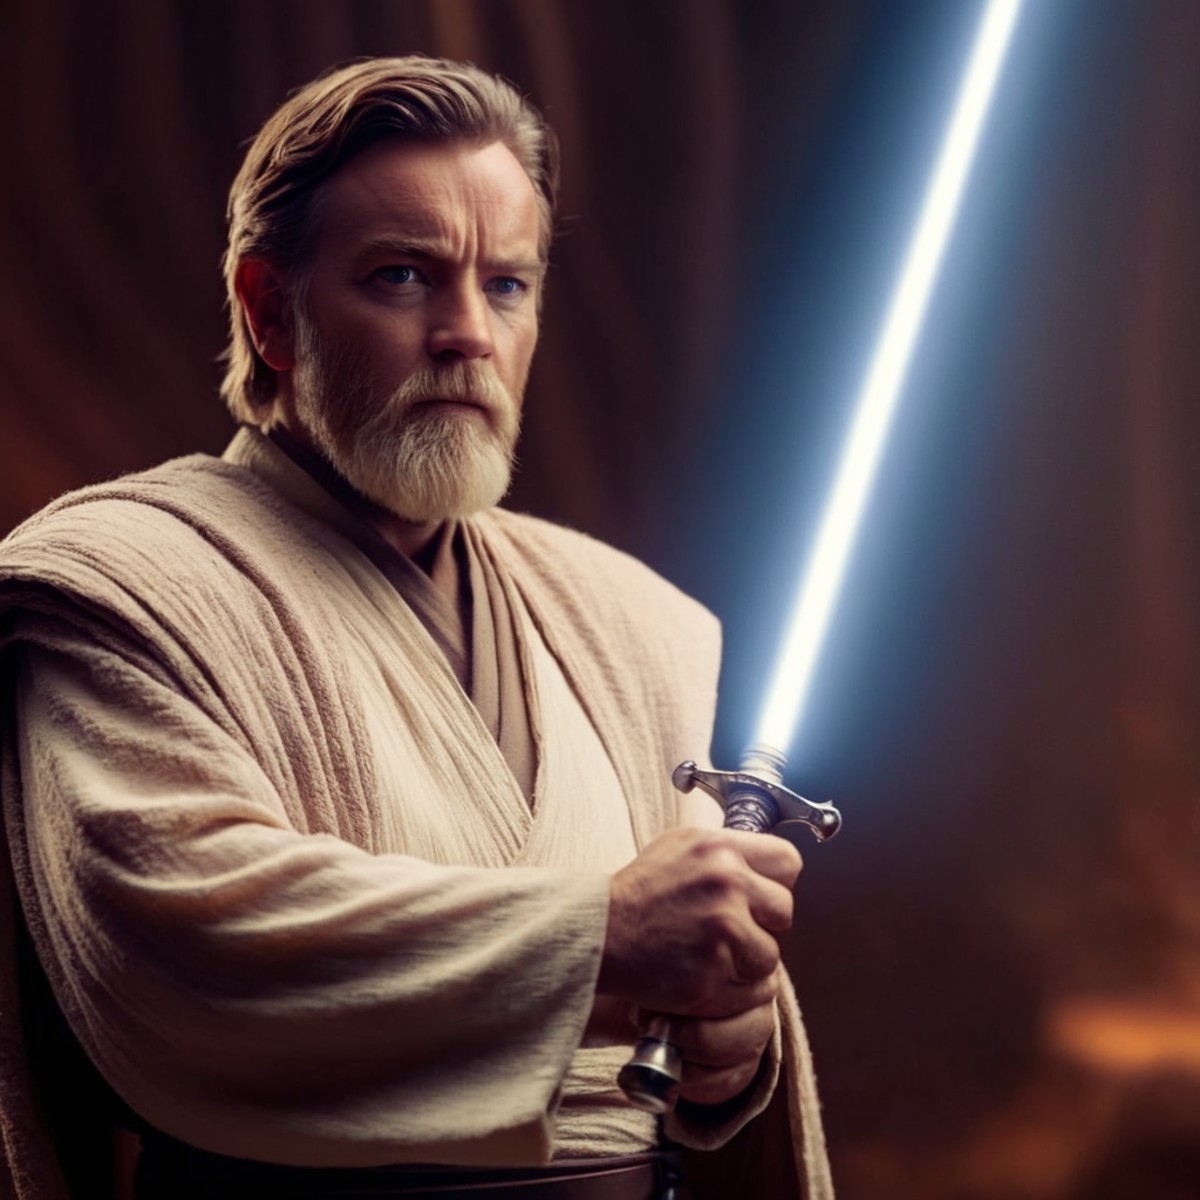 cinematic film still of  <lora:Obi-Wan Kenobi:1.2>
Obi-Wan Kenobi an old grey beard man with a sword in his hand in star w...